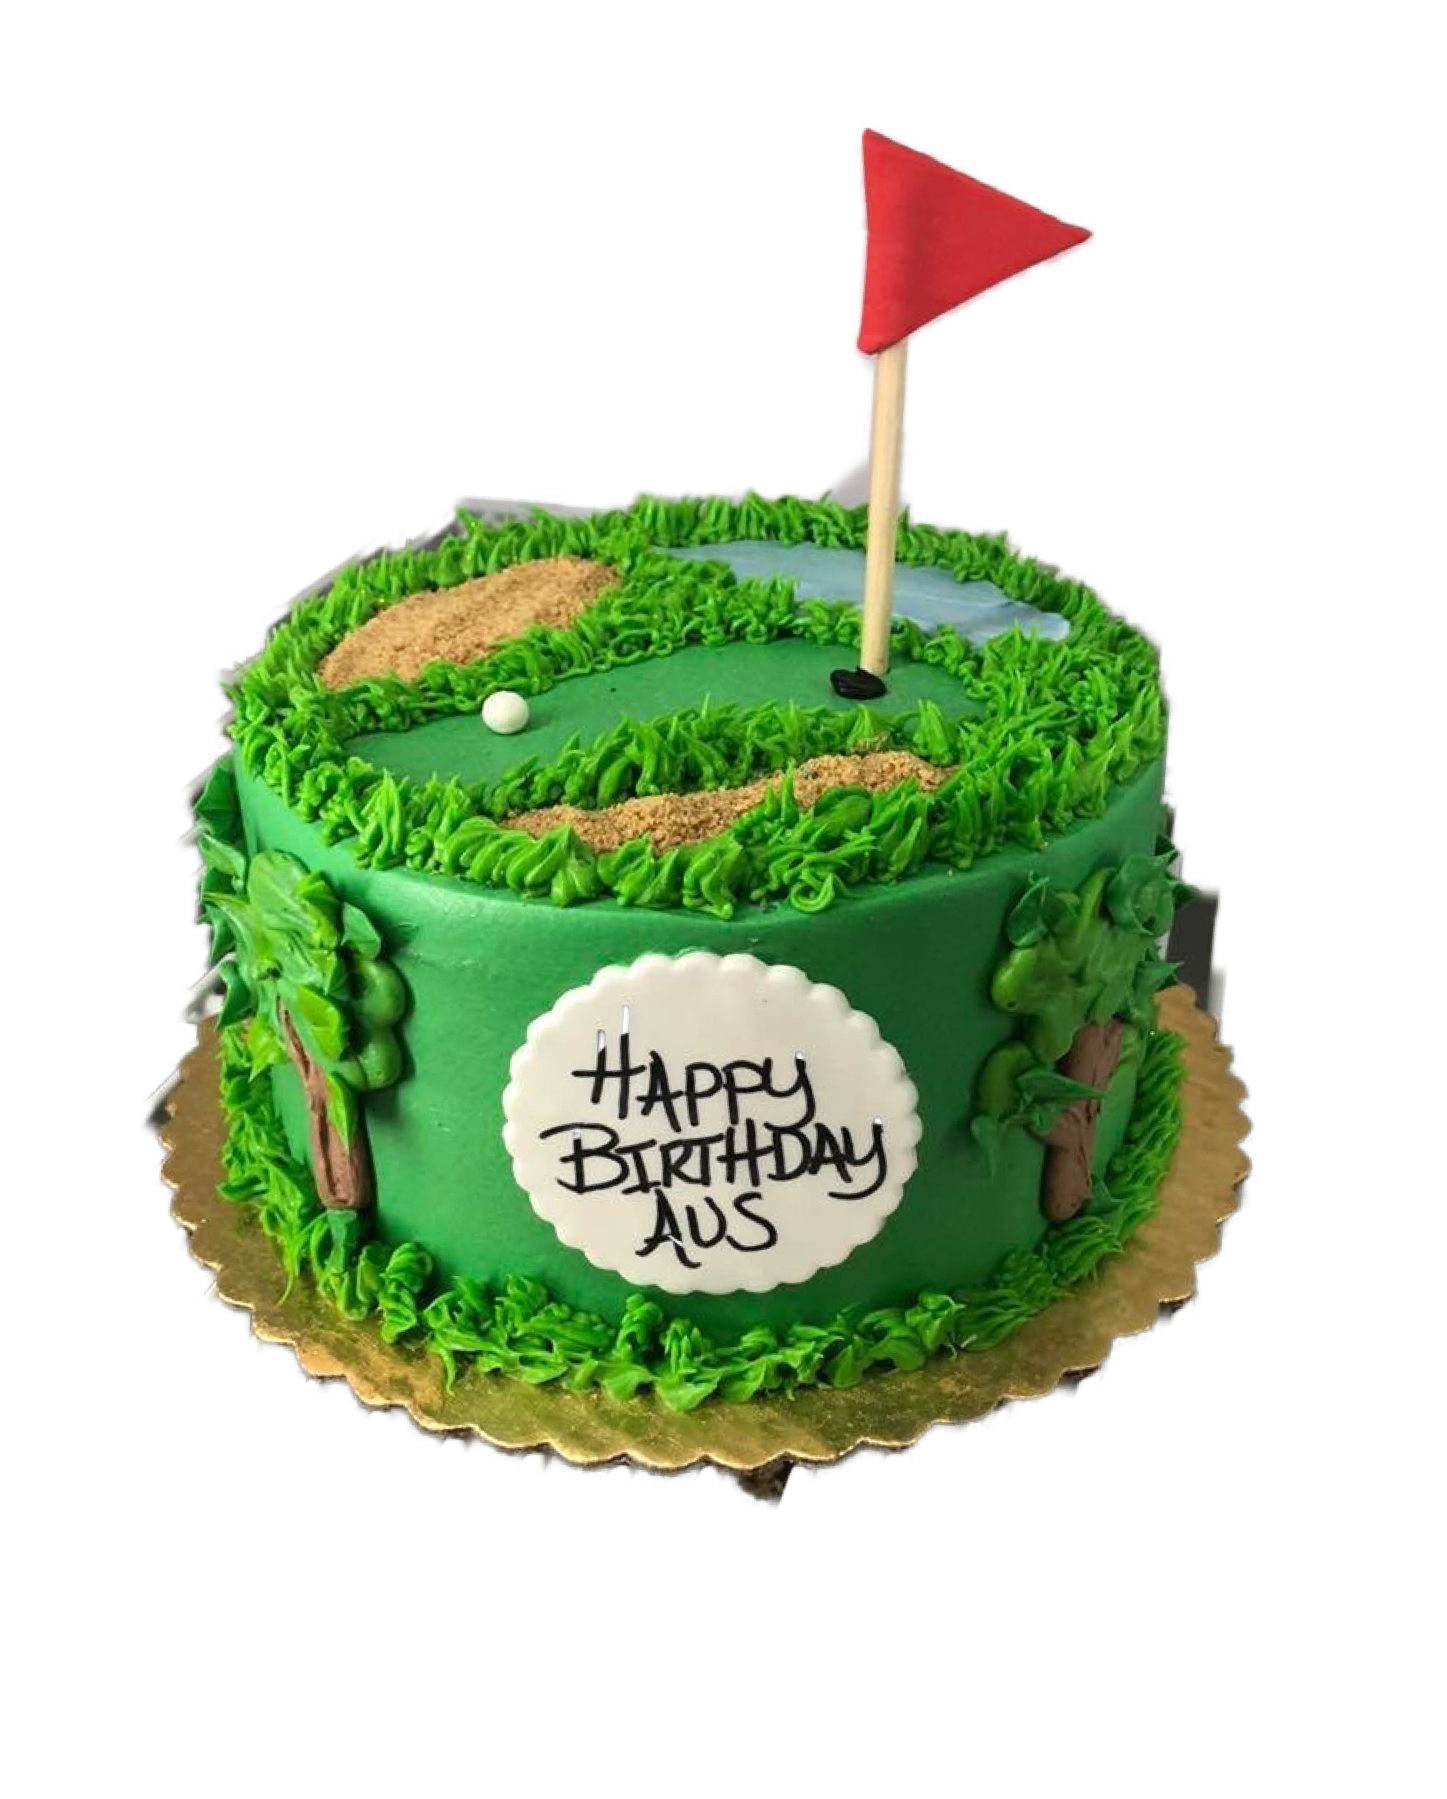 Go Crazy Golf Birthday Cake - Karen's Cakes